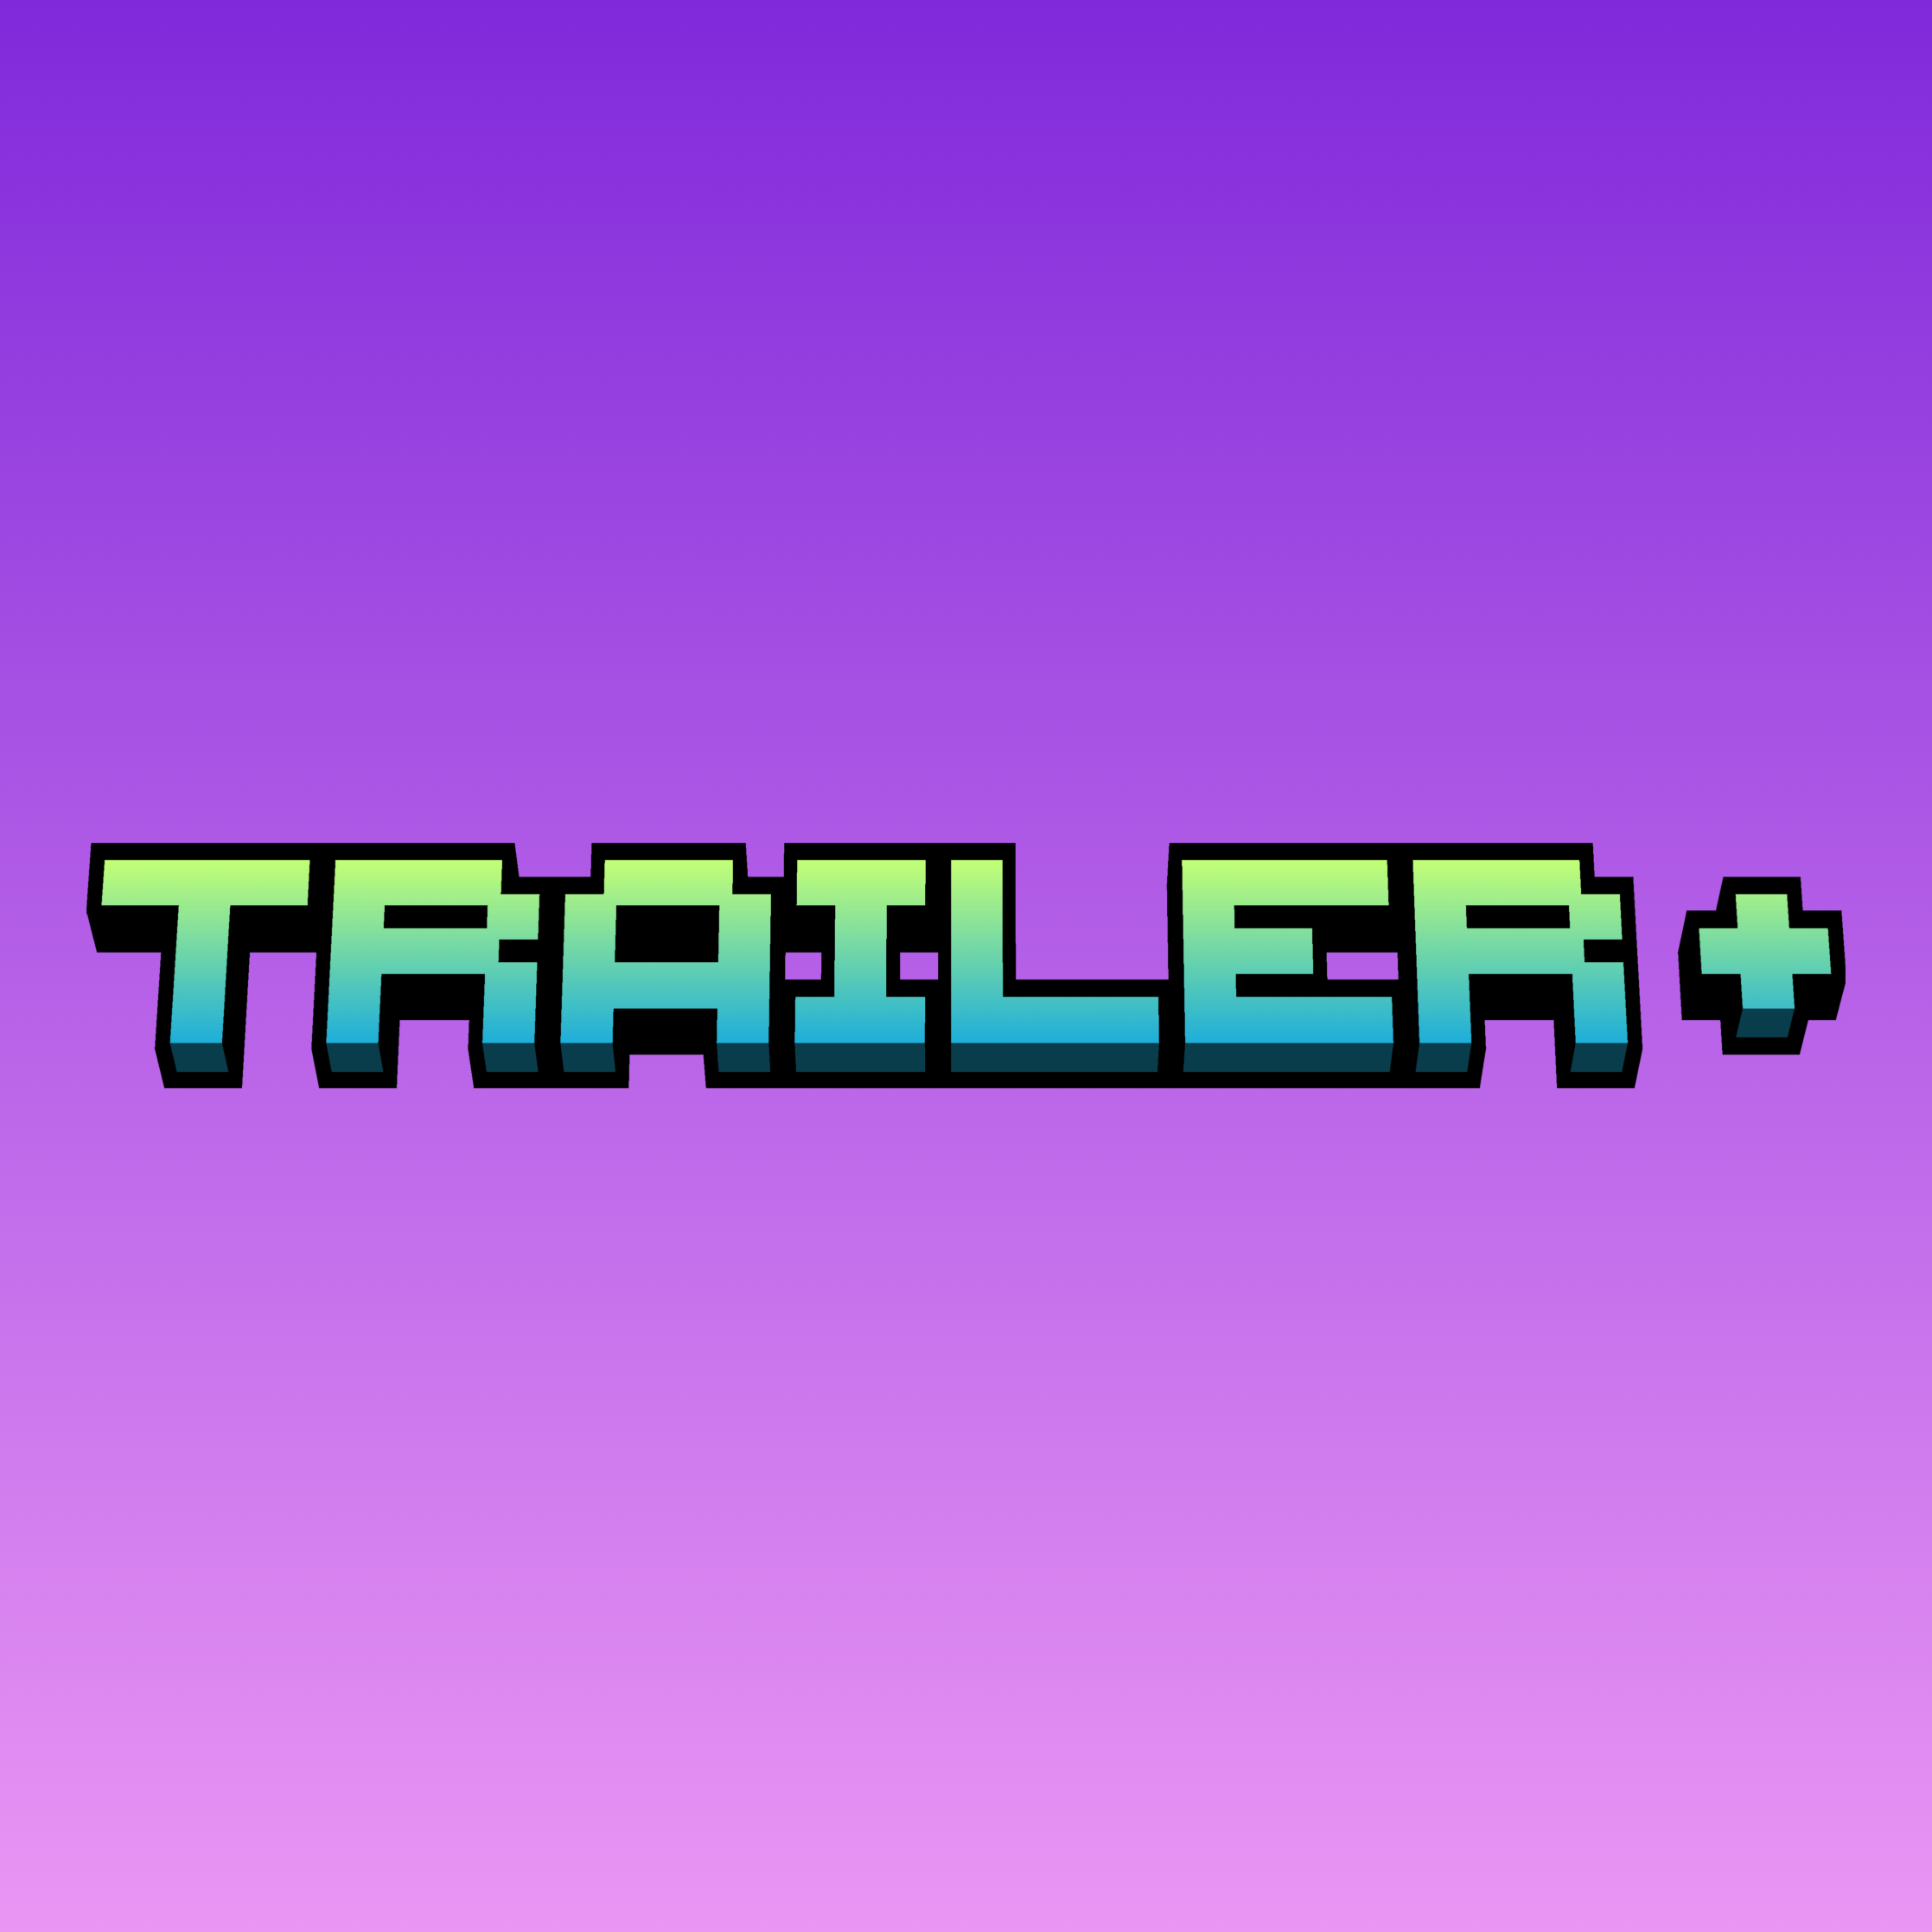 Trailer +